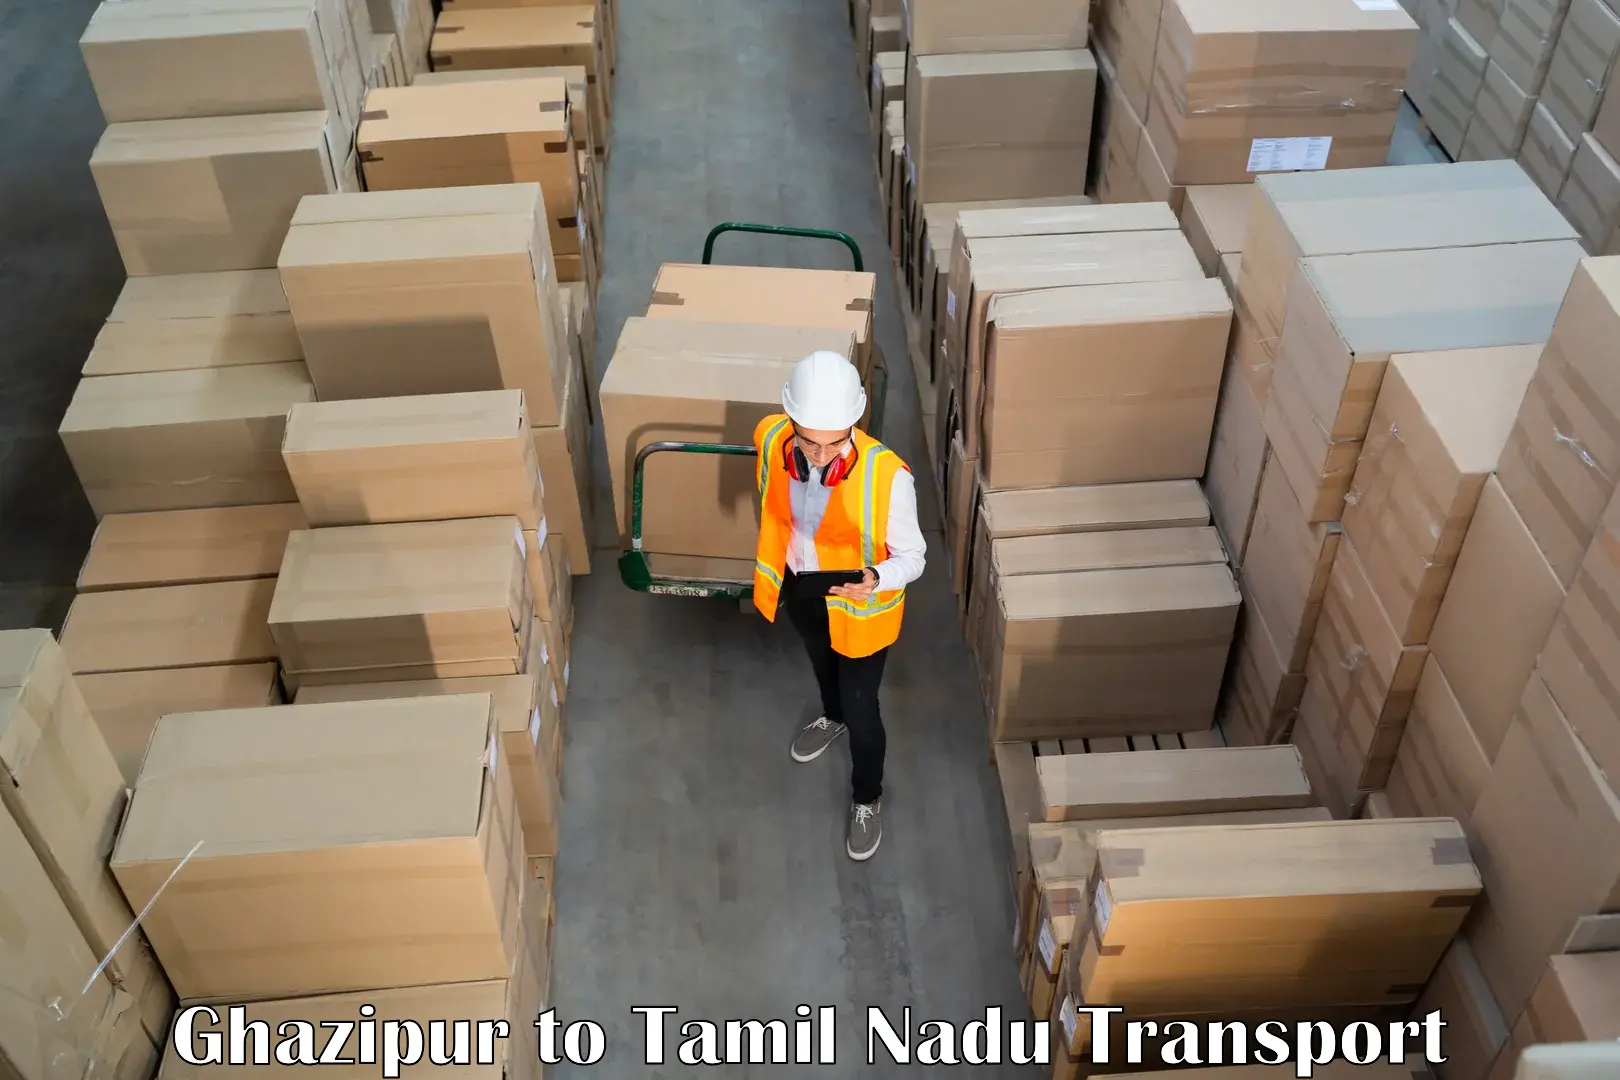 Shipping partner Ghazipur to Kovilpatti